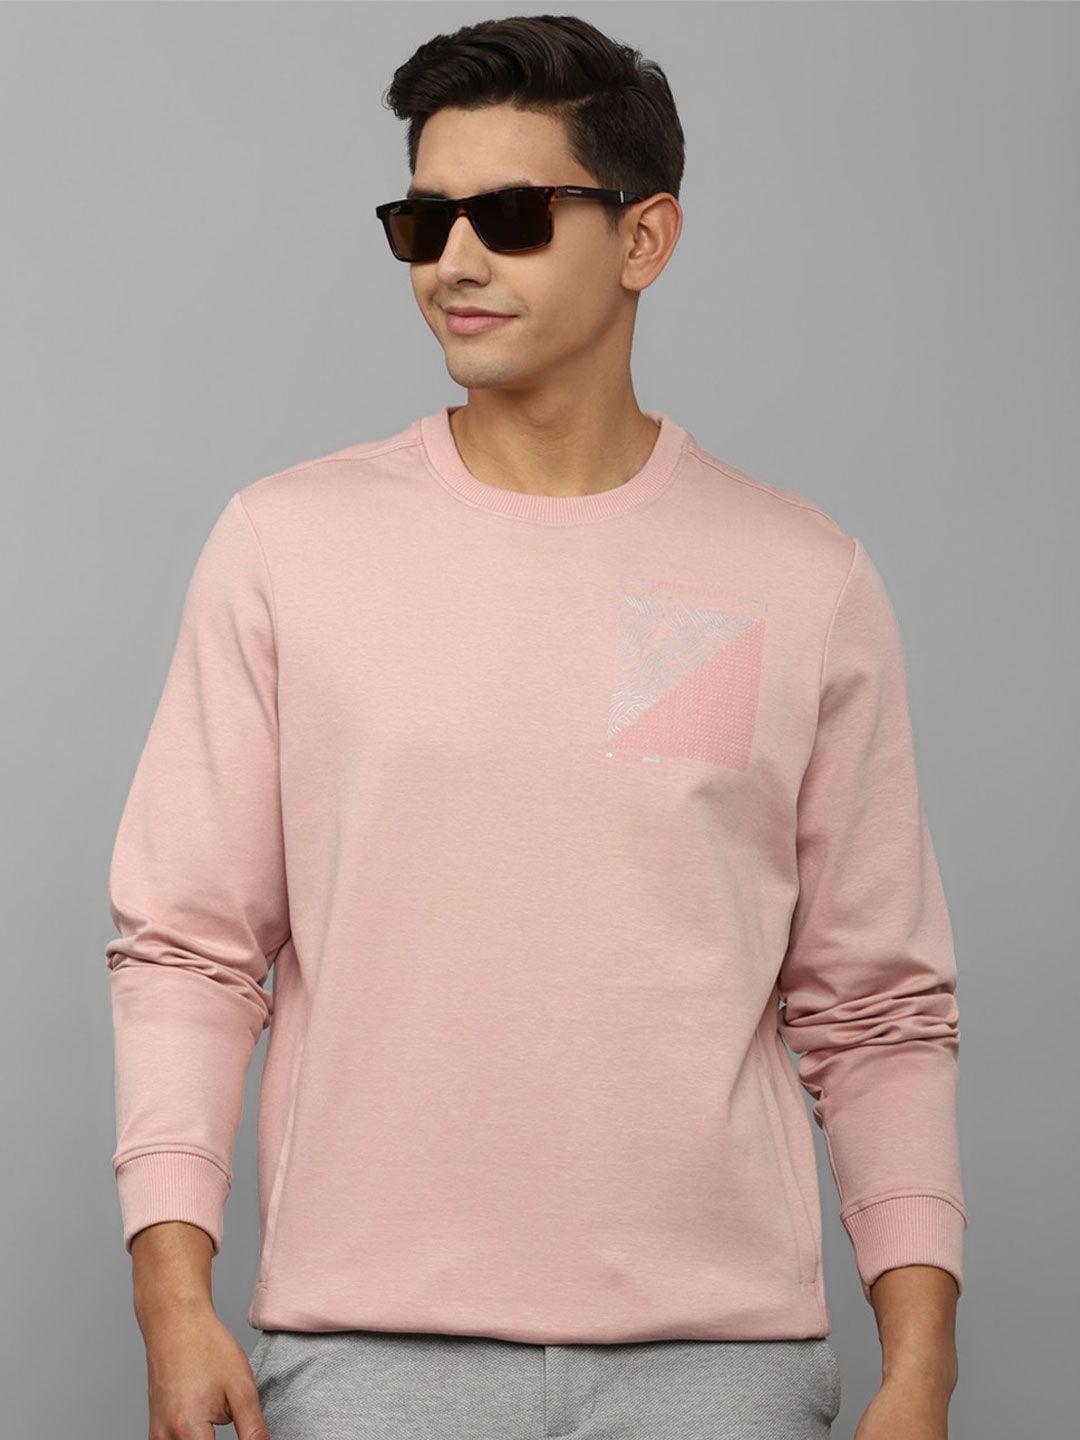 louis philippe sport men pink cotton sweatshirt